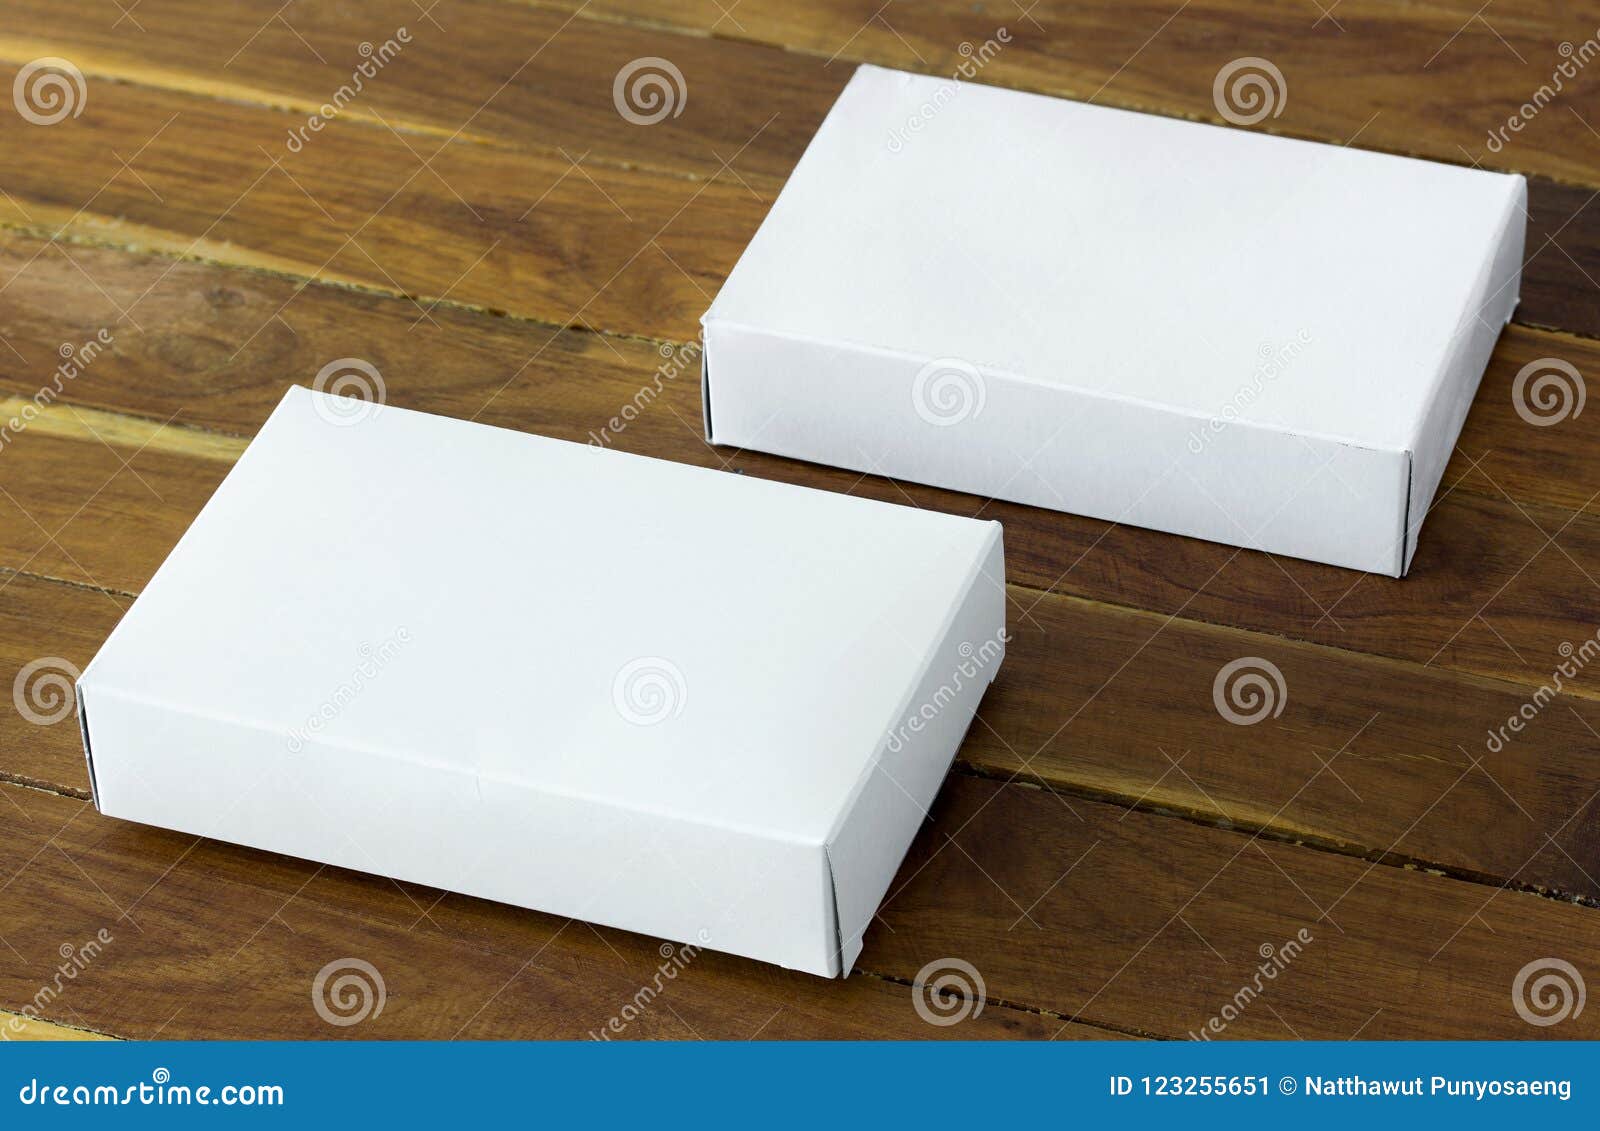 Download Blank White Cardboard Package Box Mockup Stock Image ...